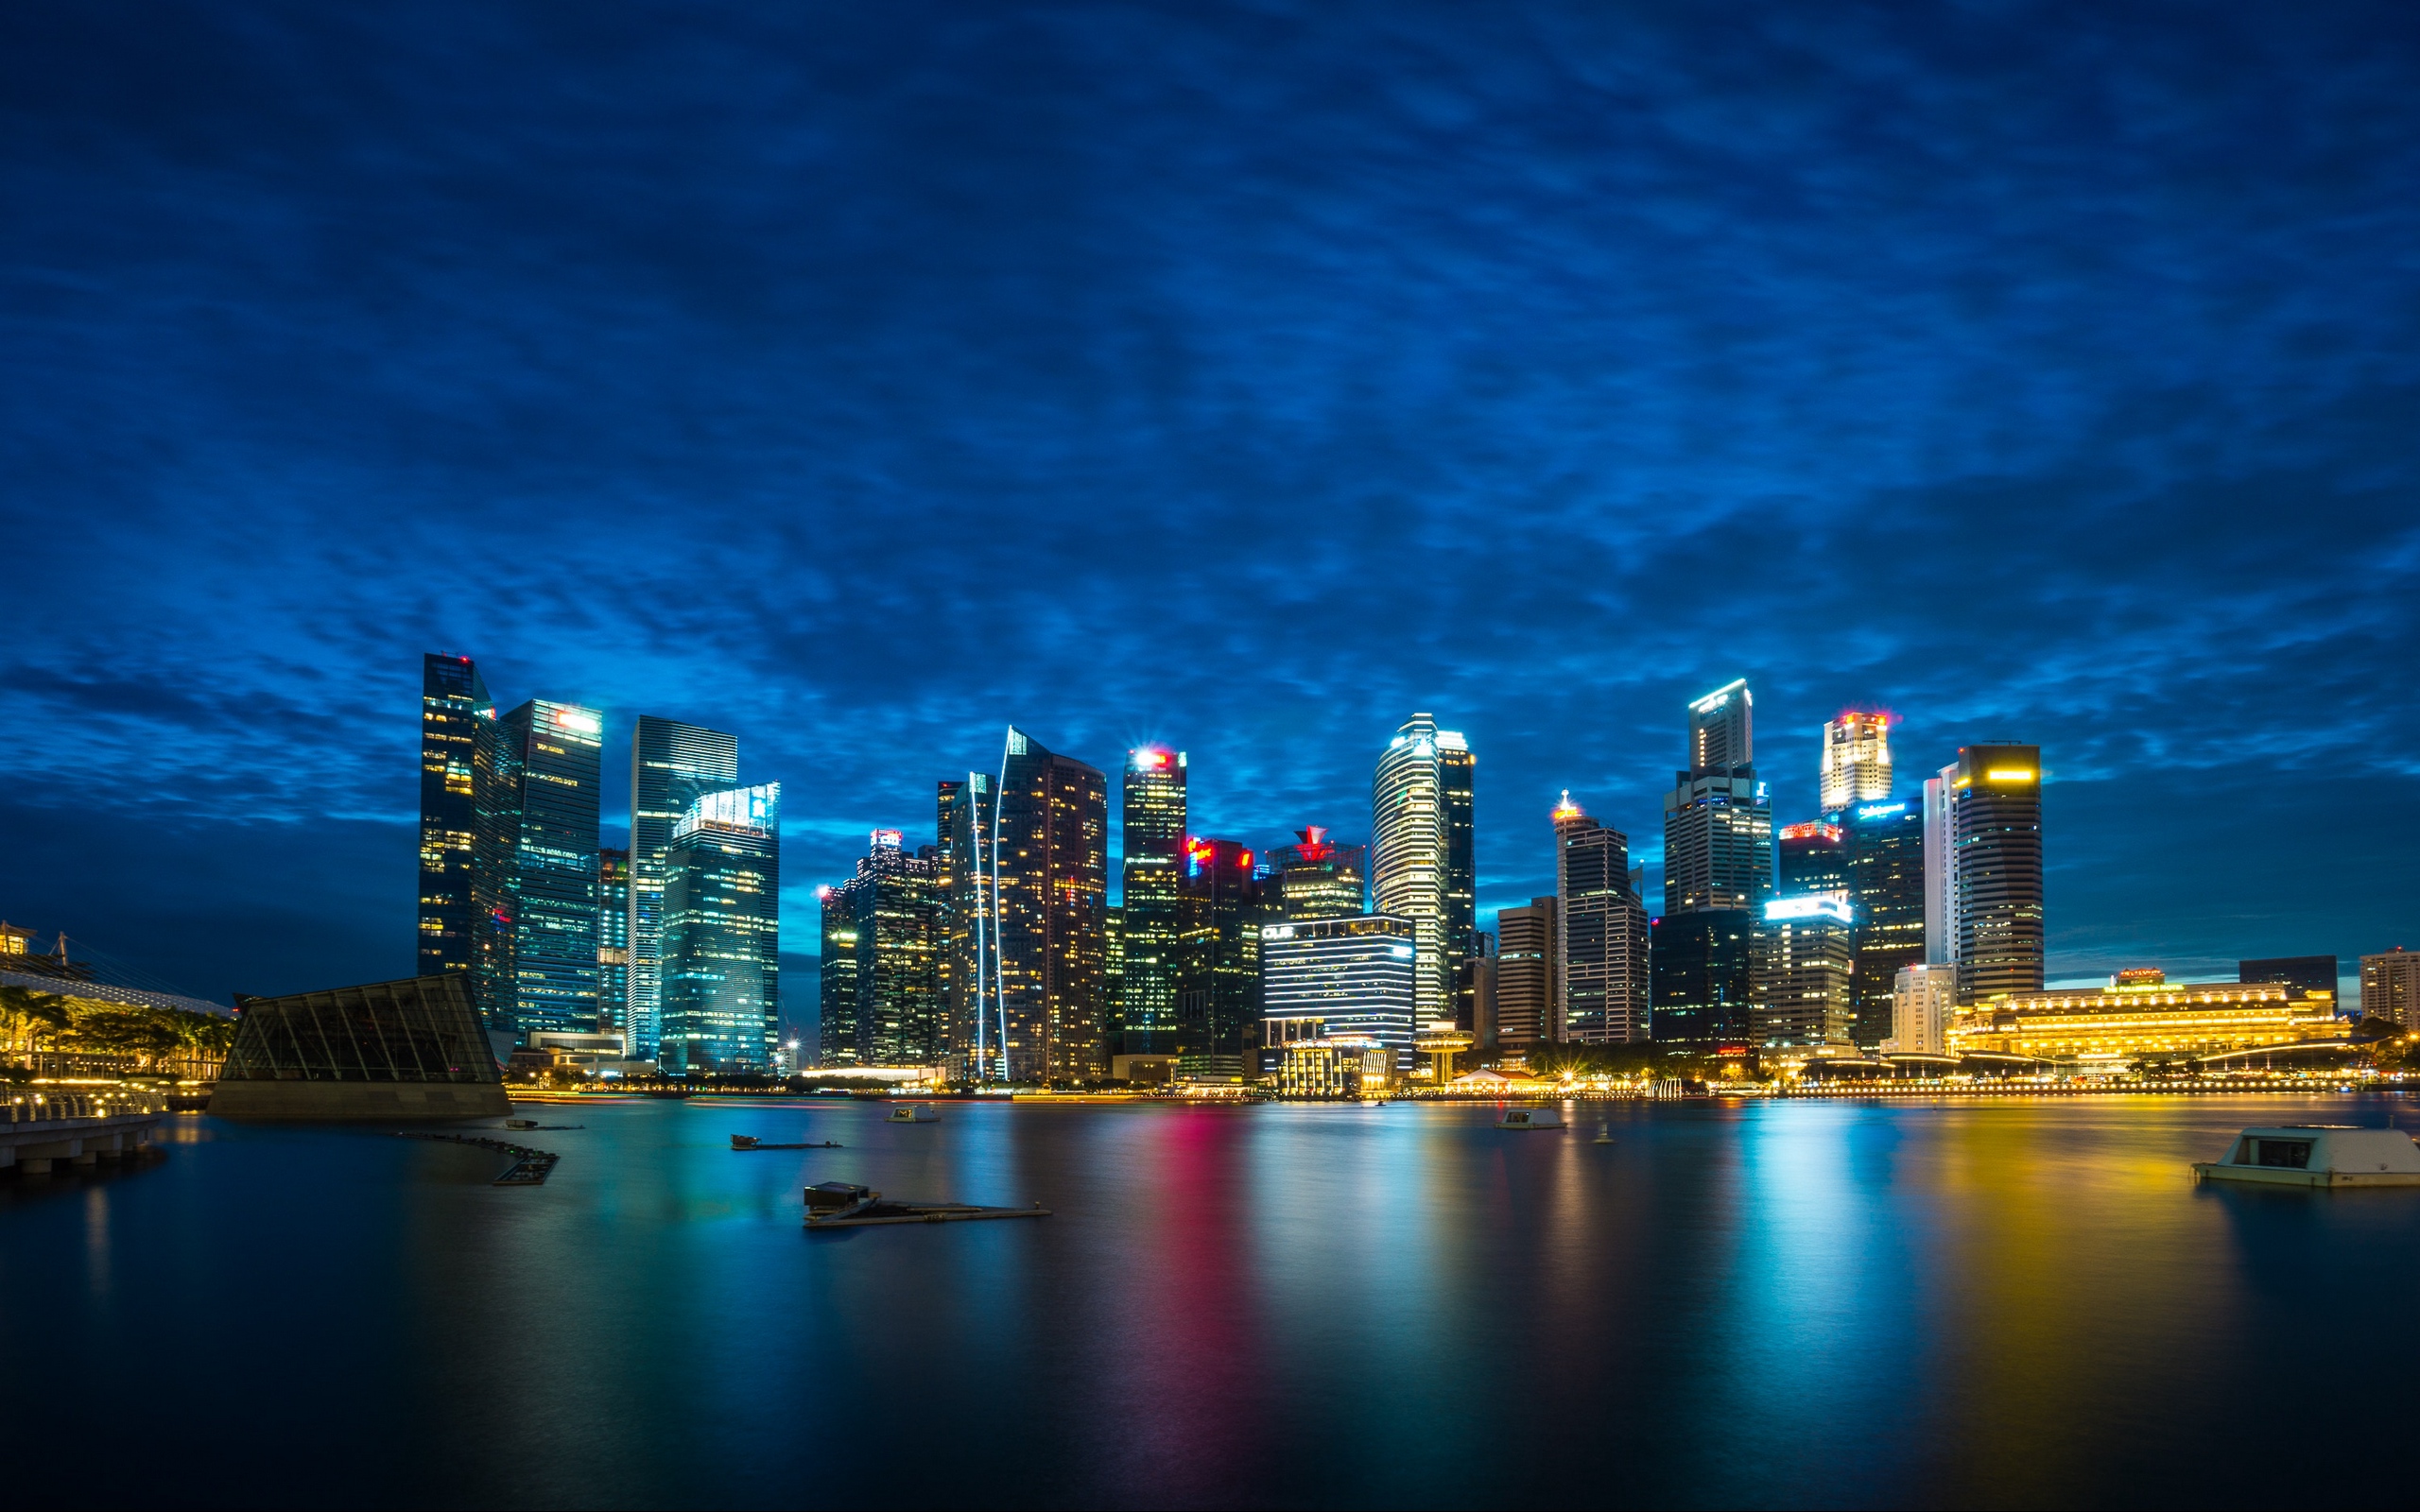 Download wallpaper 2560x1600 singapore, night city